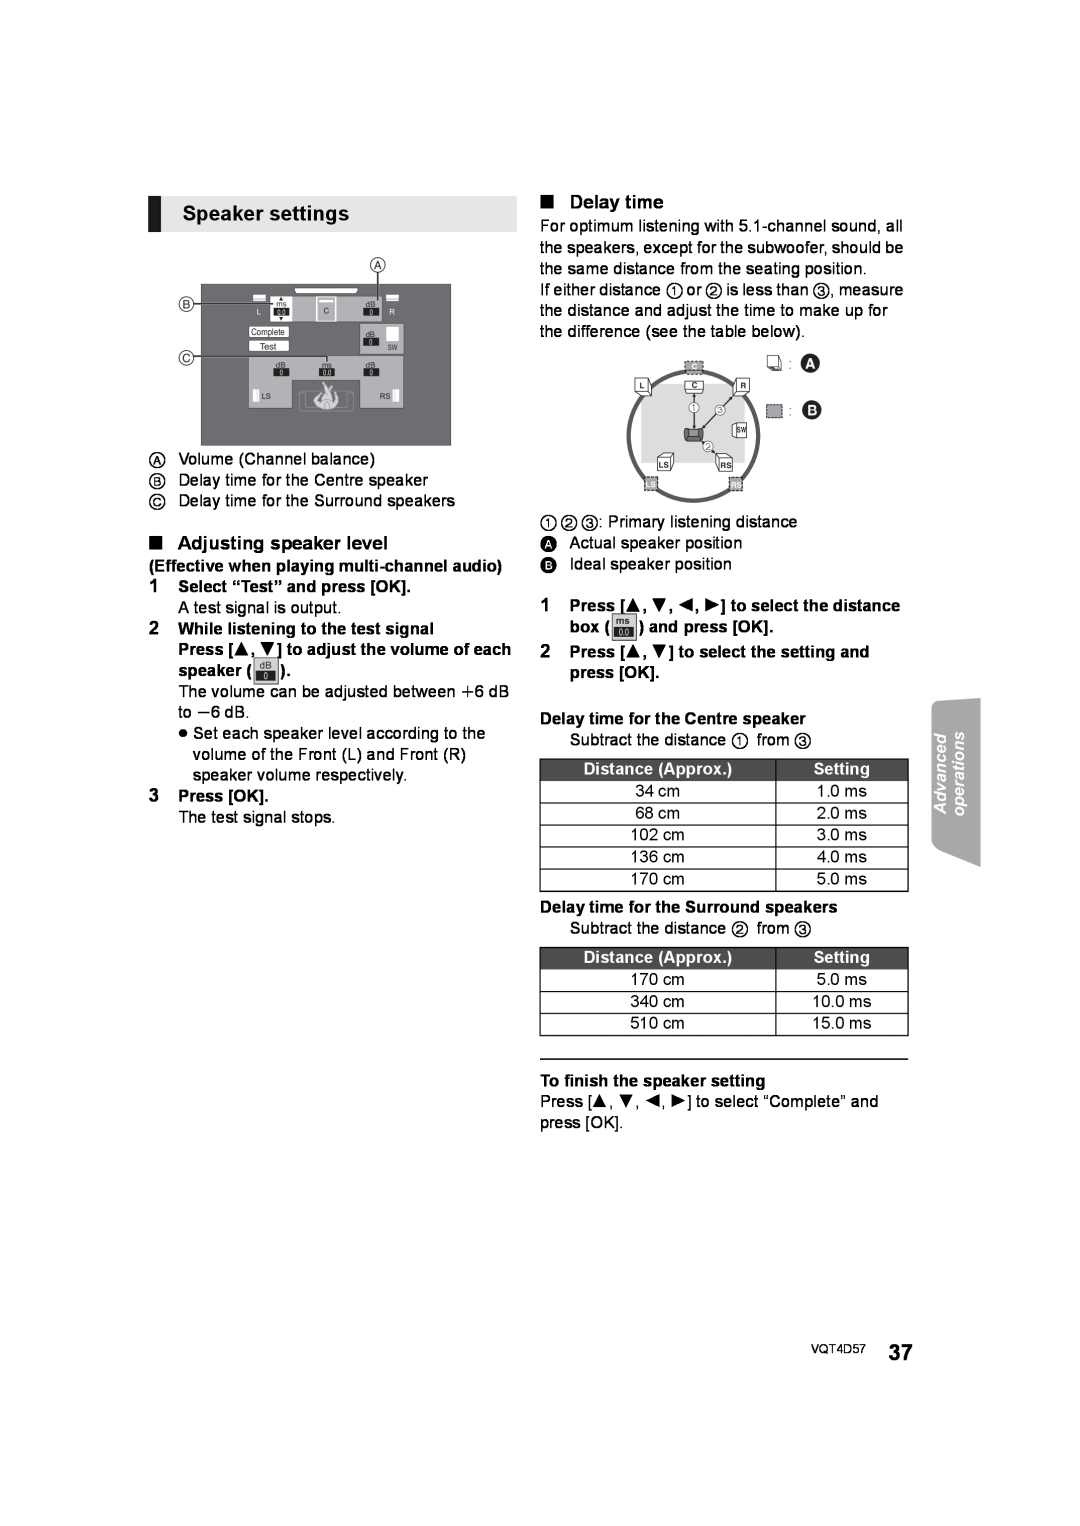 Panasonic SC-BTT190 manual Speaker settings, ∫Adjusting speaker level, ∫Delay time, Distance Approx, Setting, Advanced 